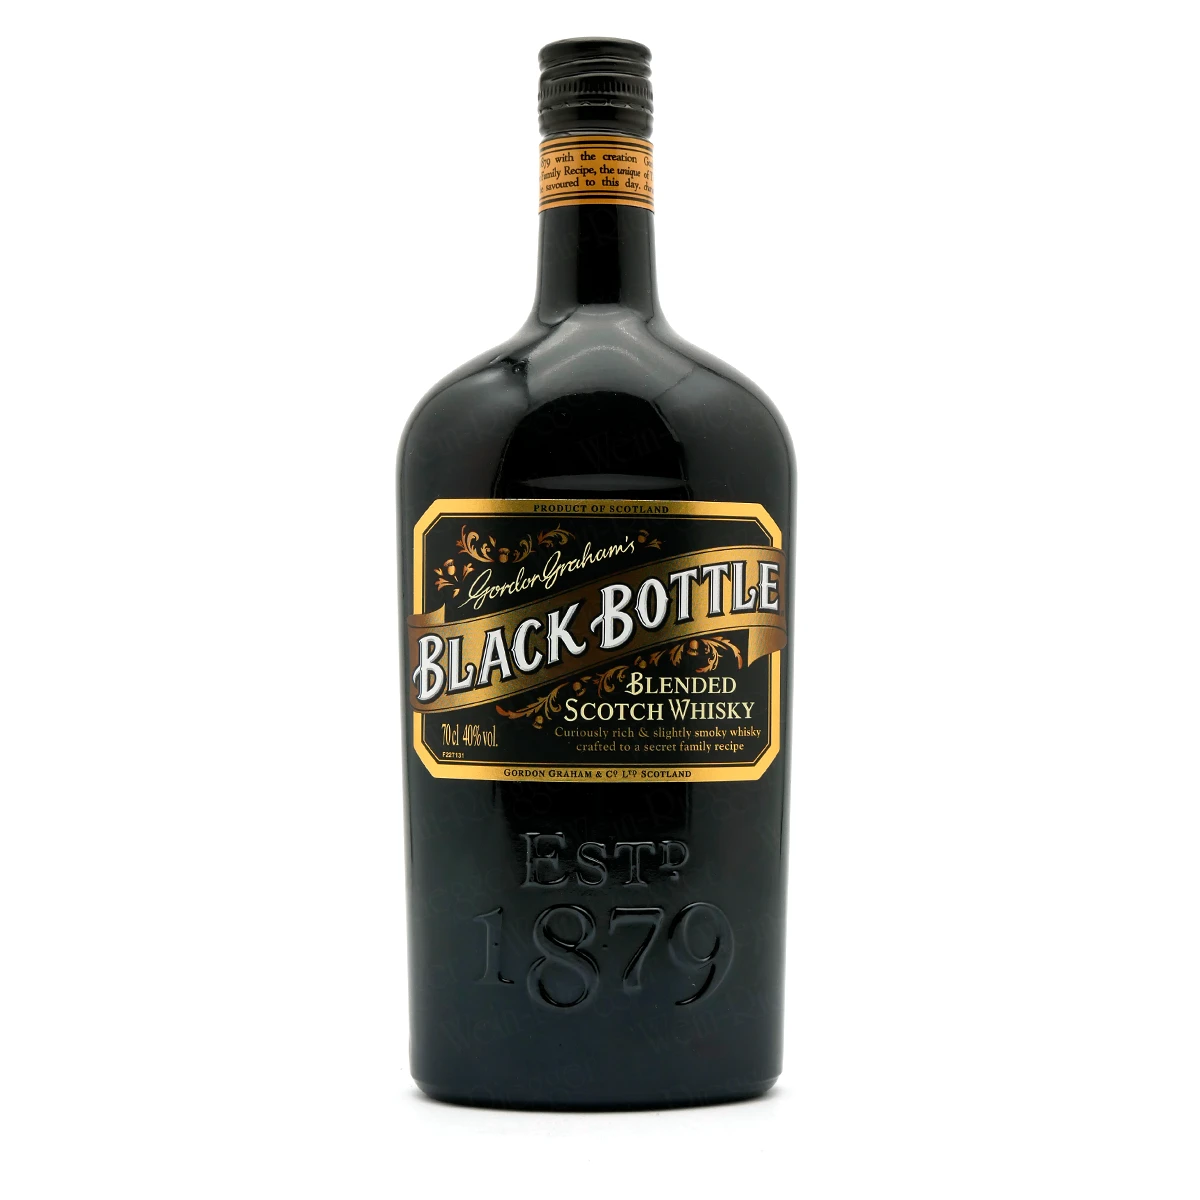 BLACK BOTTLE Blended Scotch Whisky